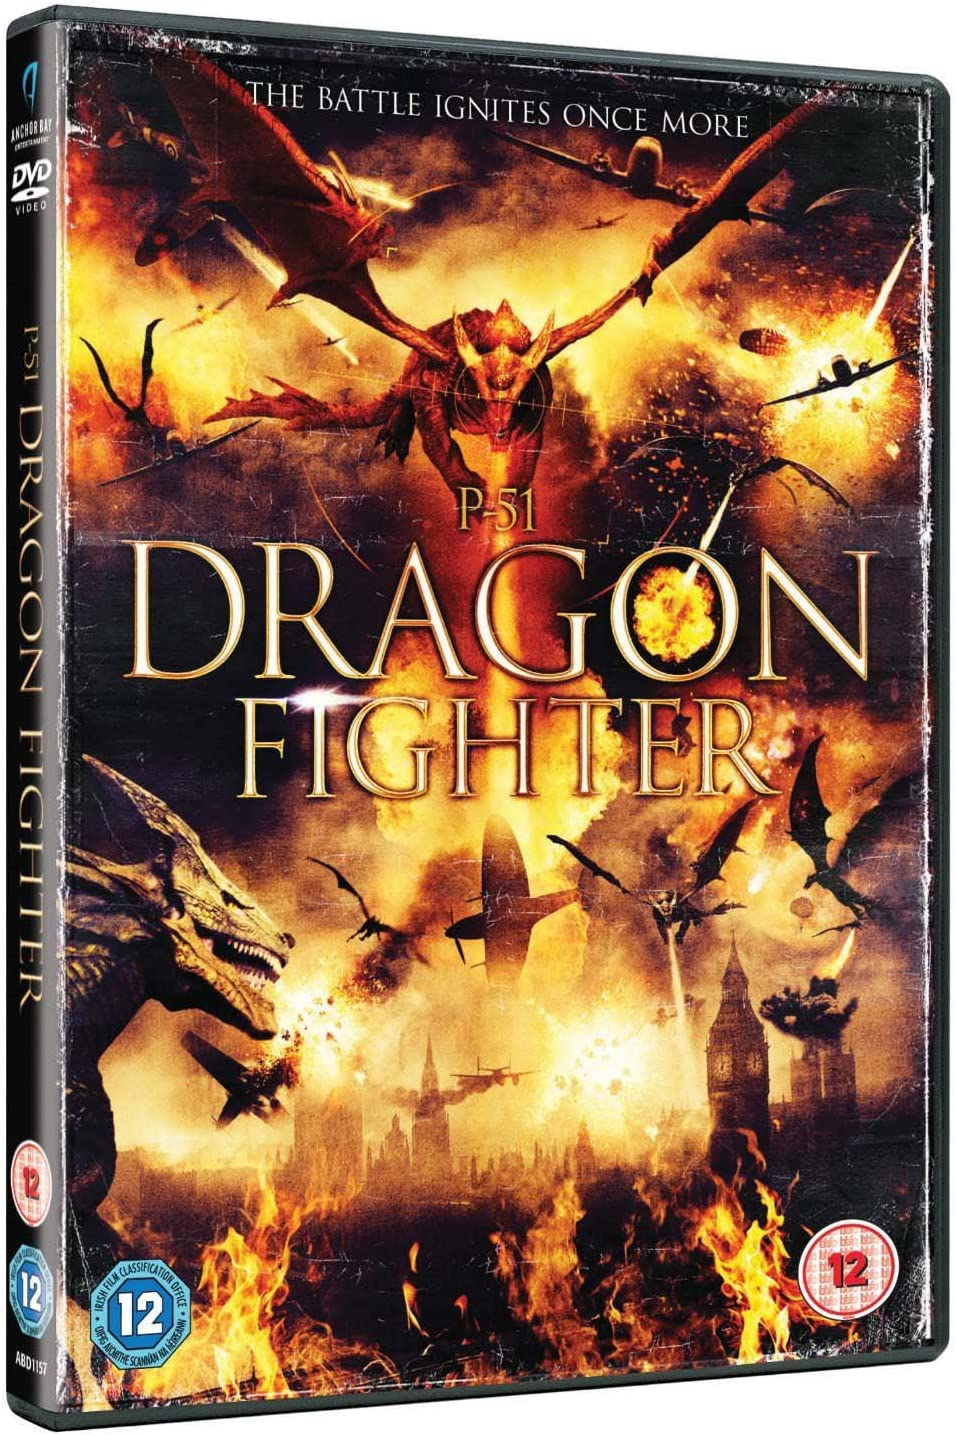 P-51 Dragon Fighter - War/Action [DVD]